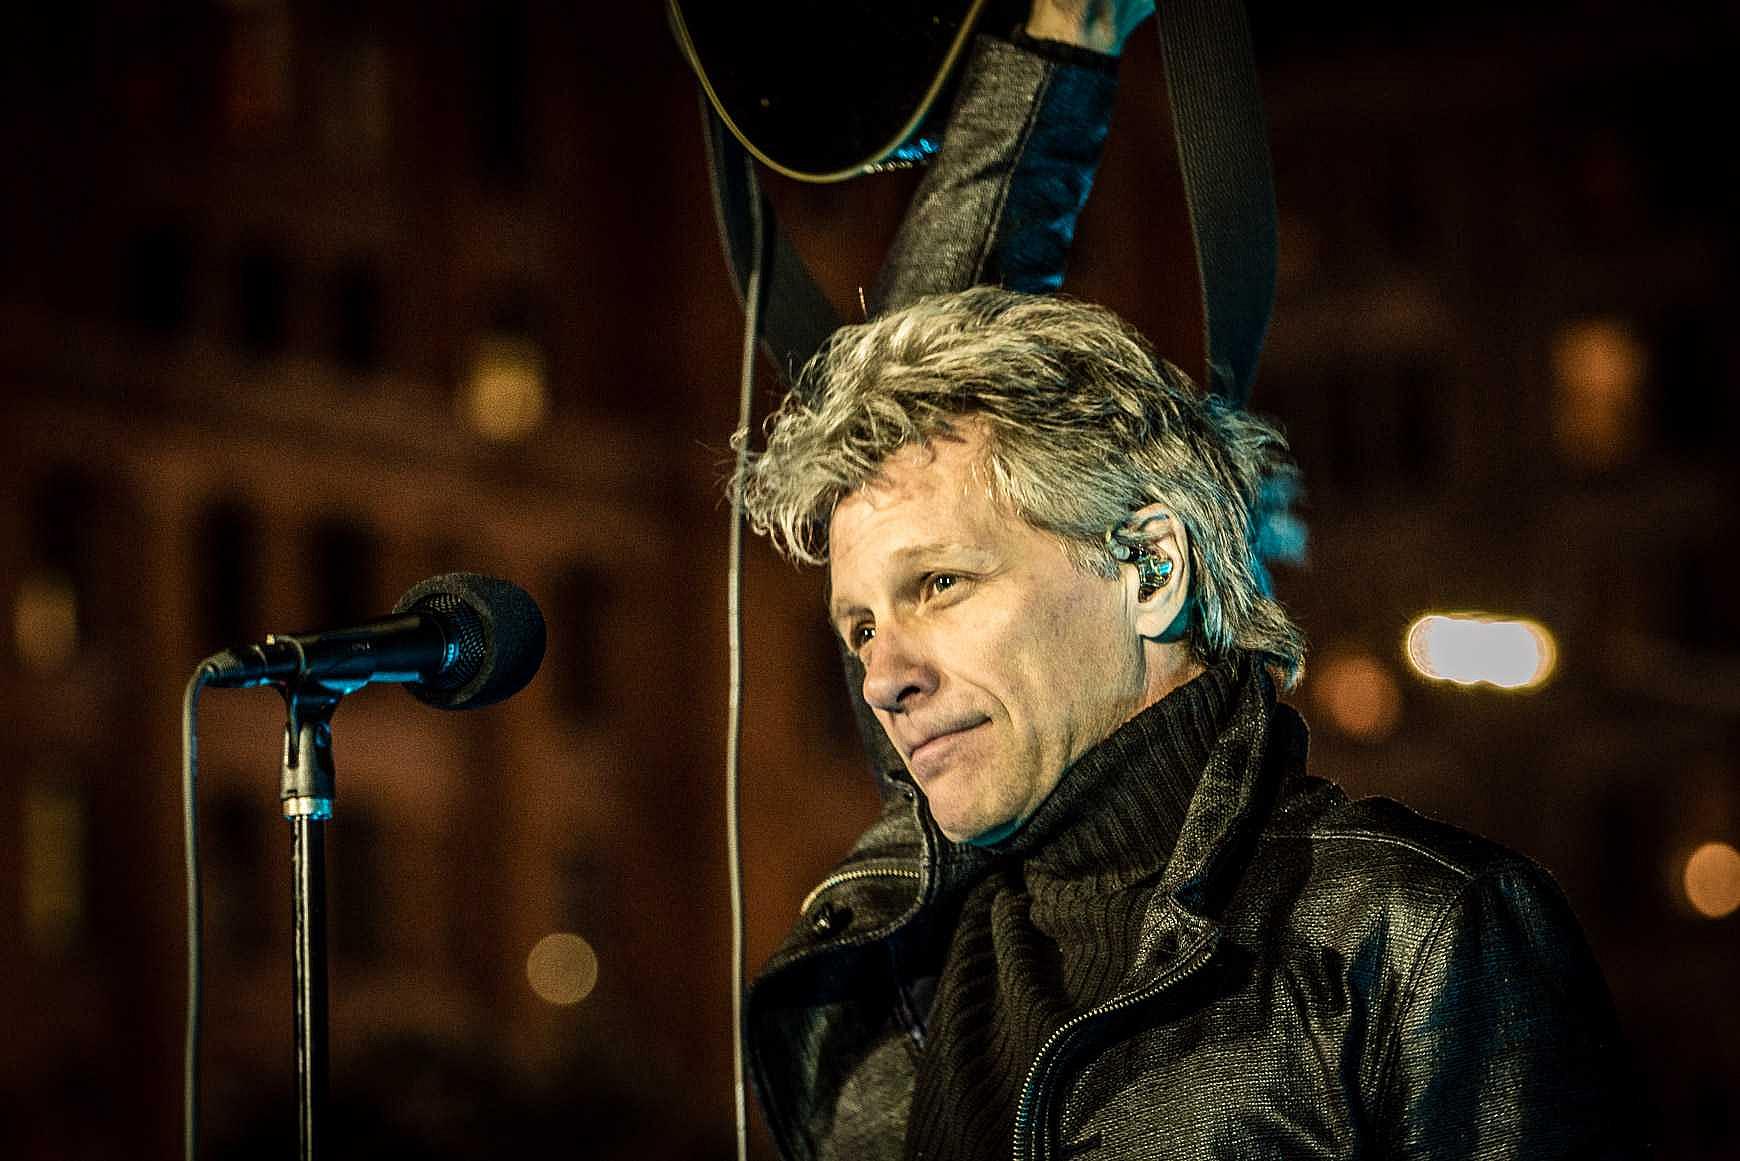 Jon Bon Jovi holds guitar above head